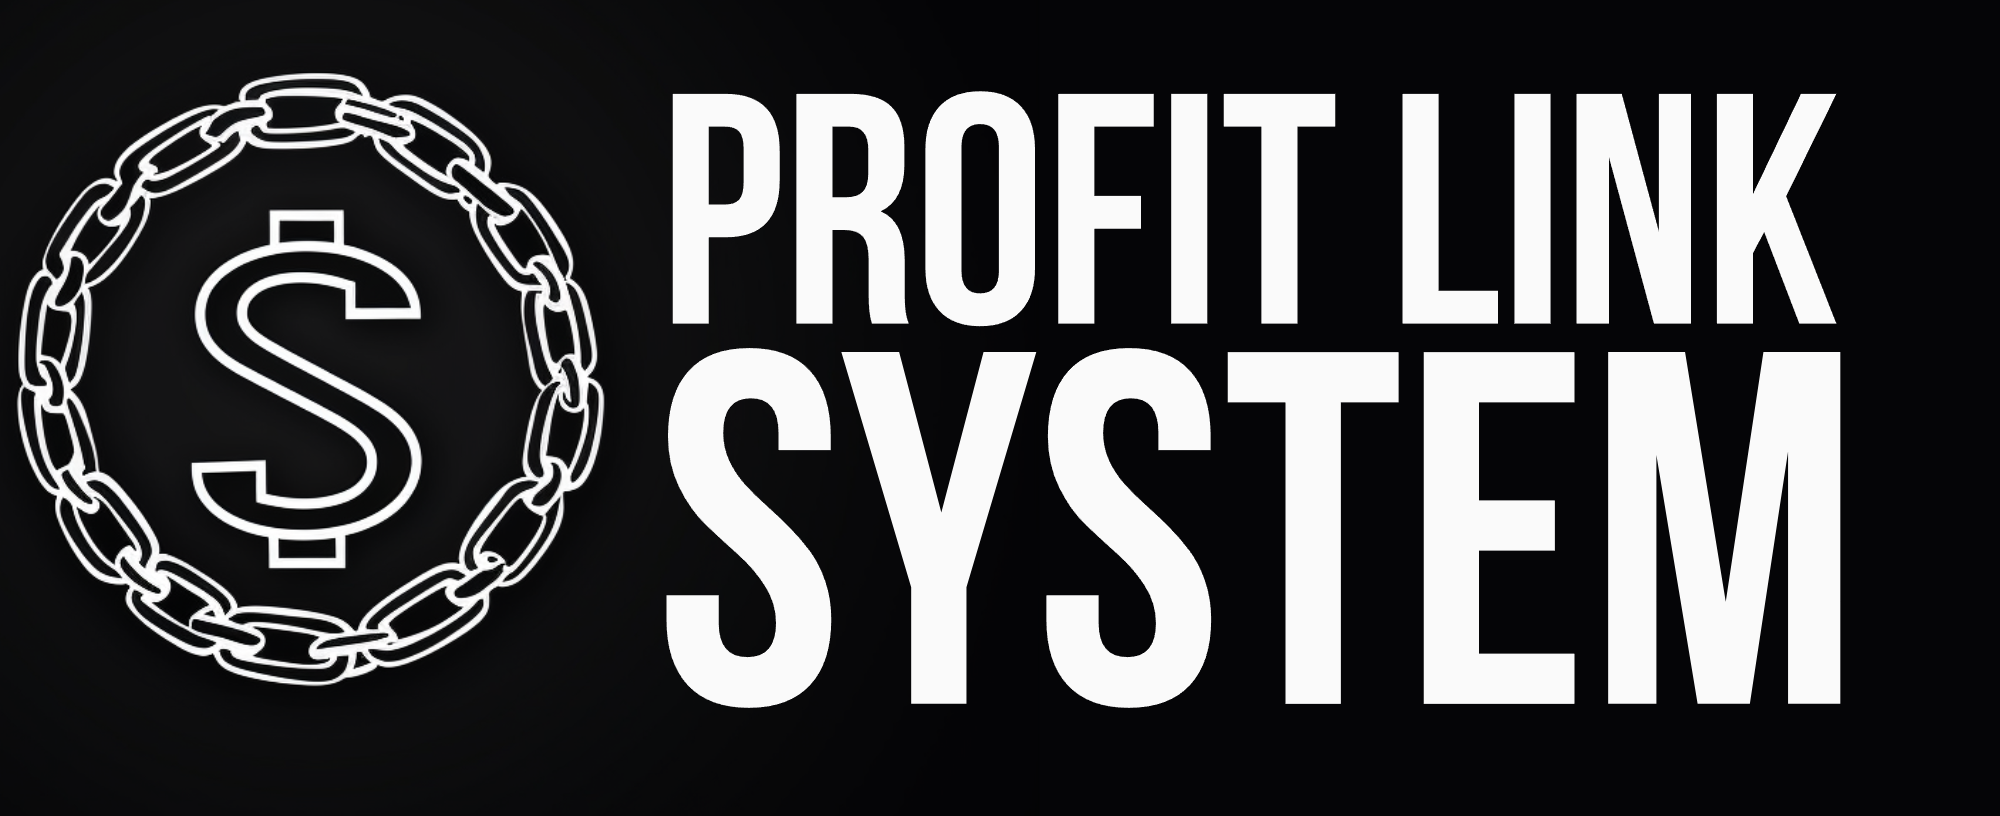 The Profit Link System